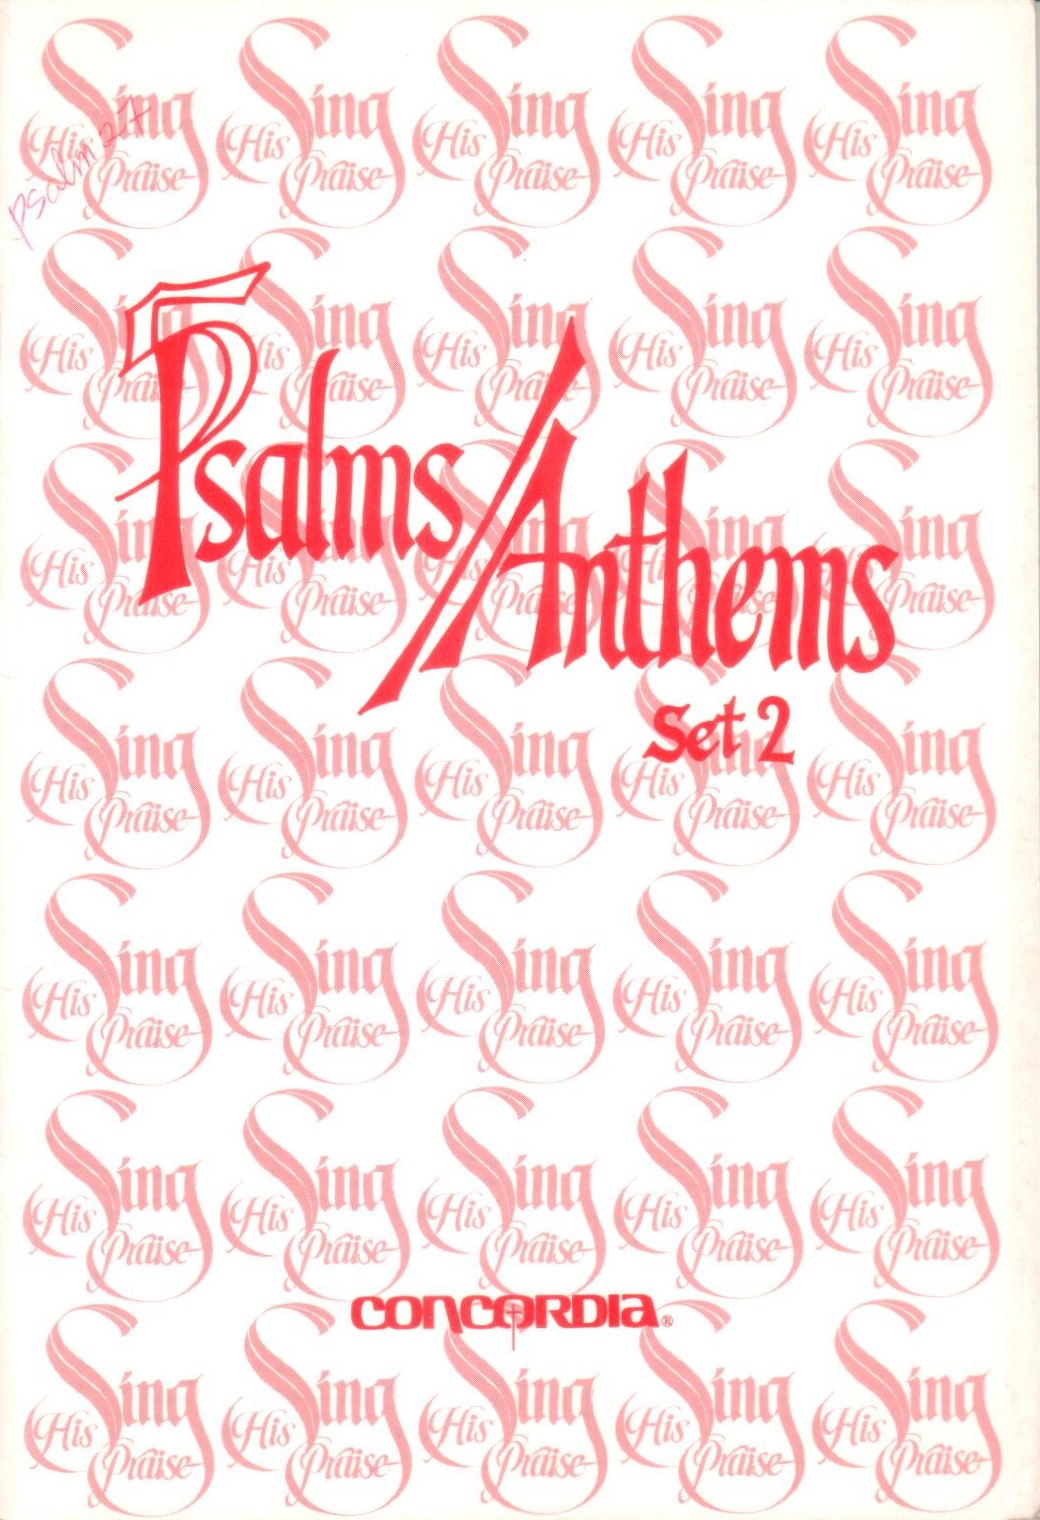 Psalms/Anthems Set 2